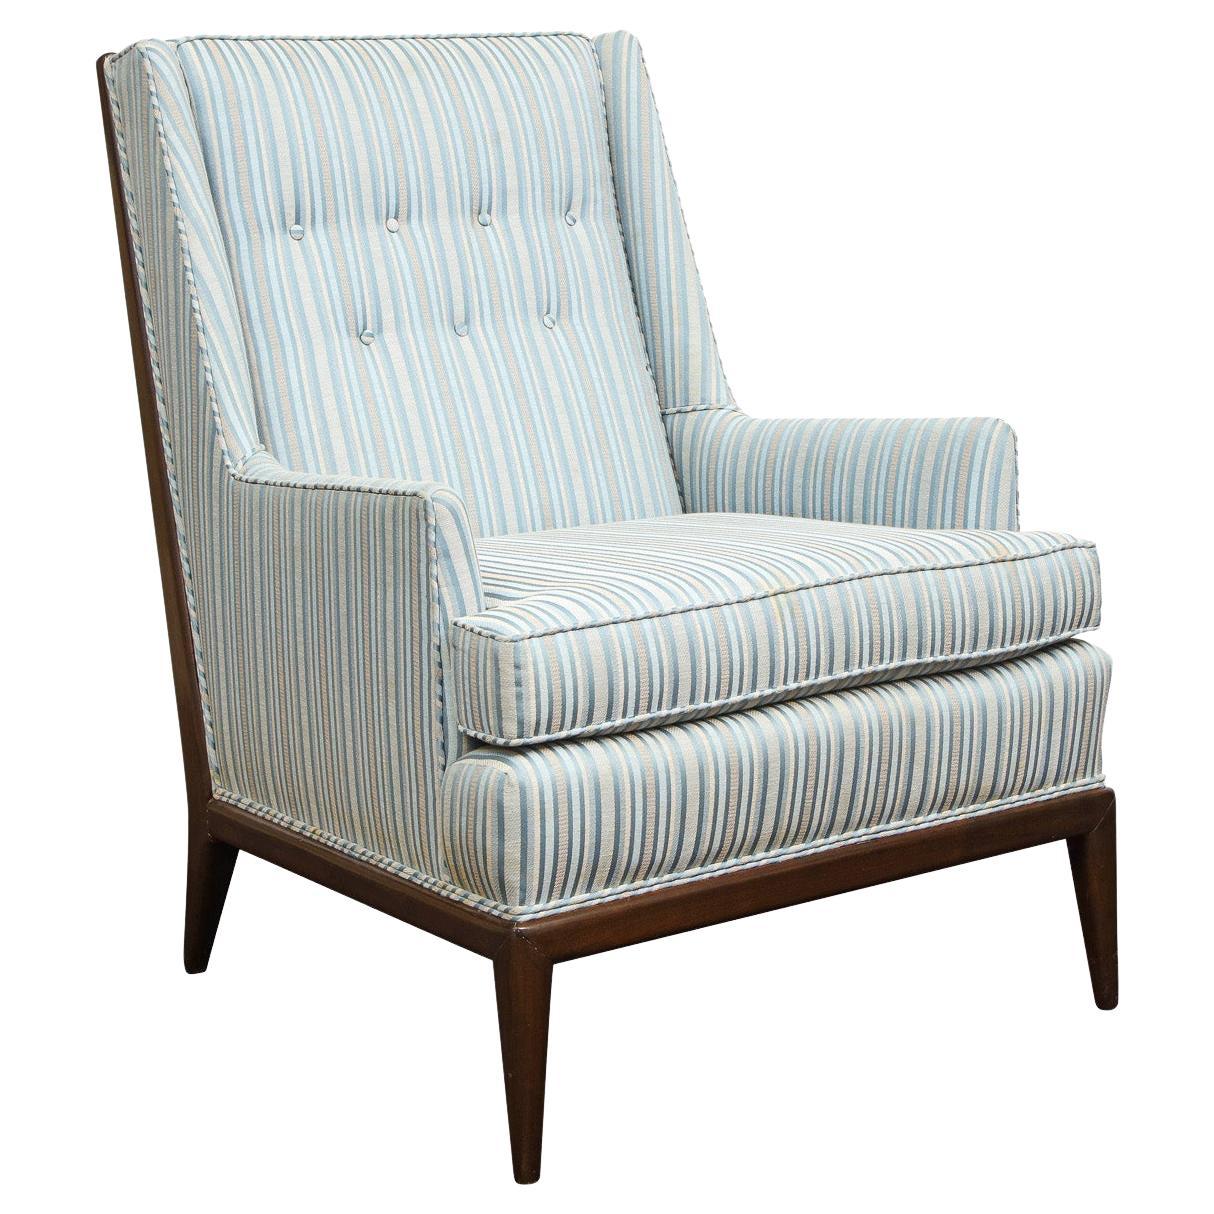 T.H. Robsjohn-Gibbings Style High Back Lounge Chair, 1950s For Sale